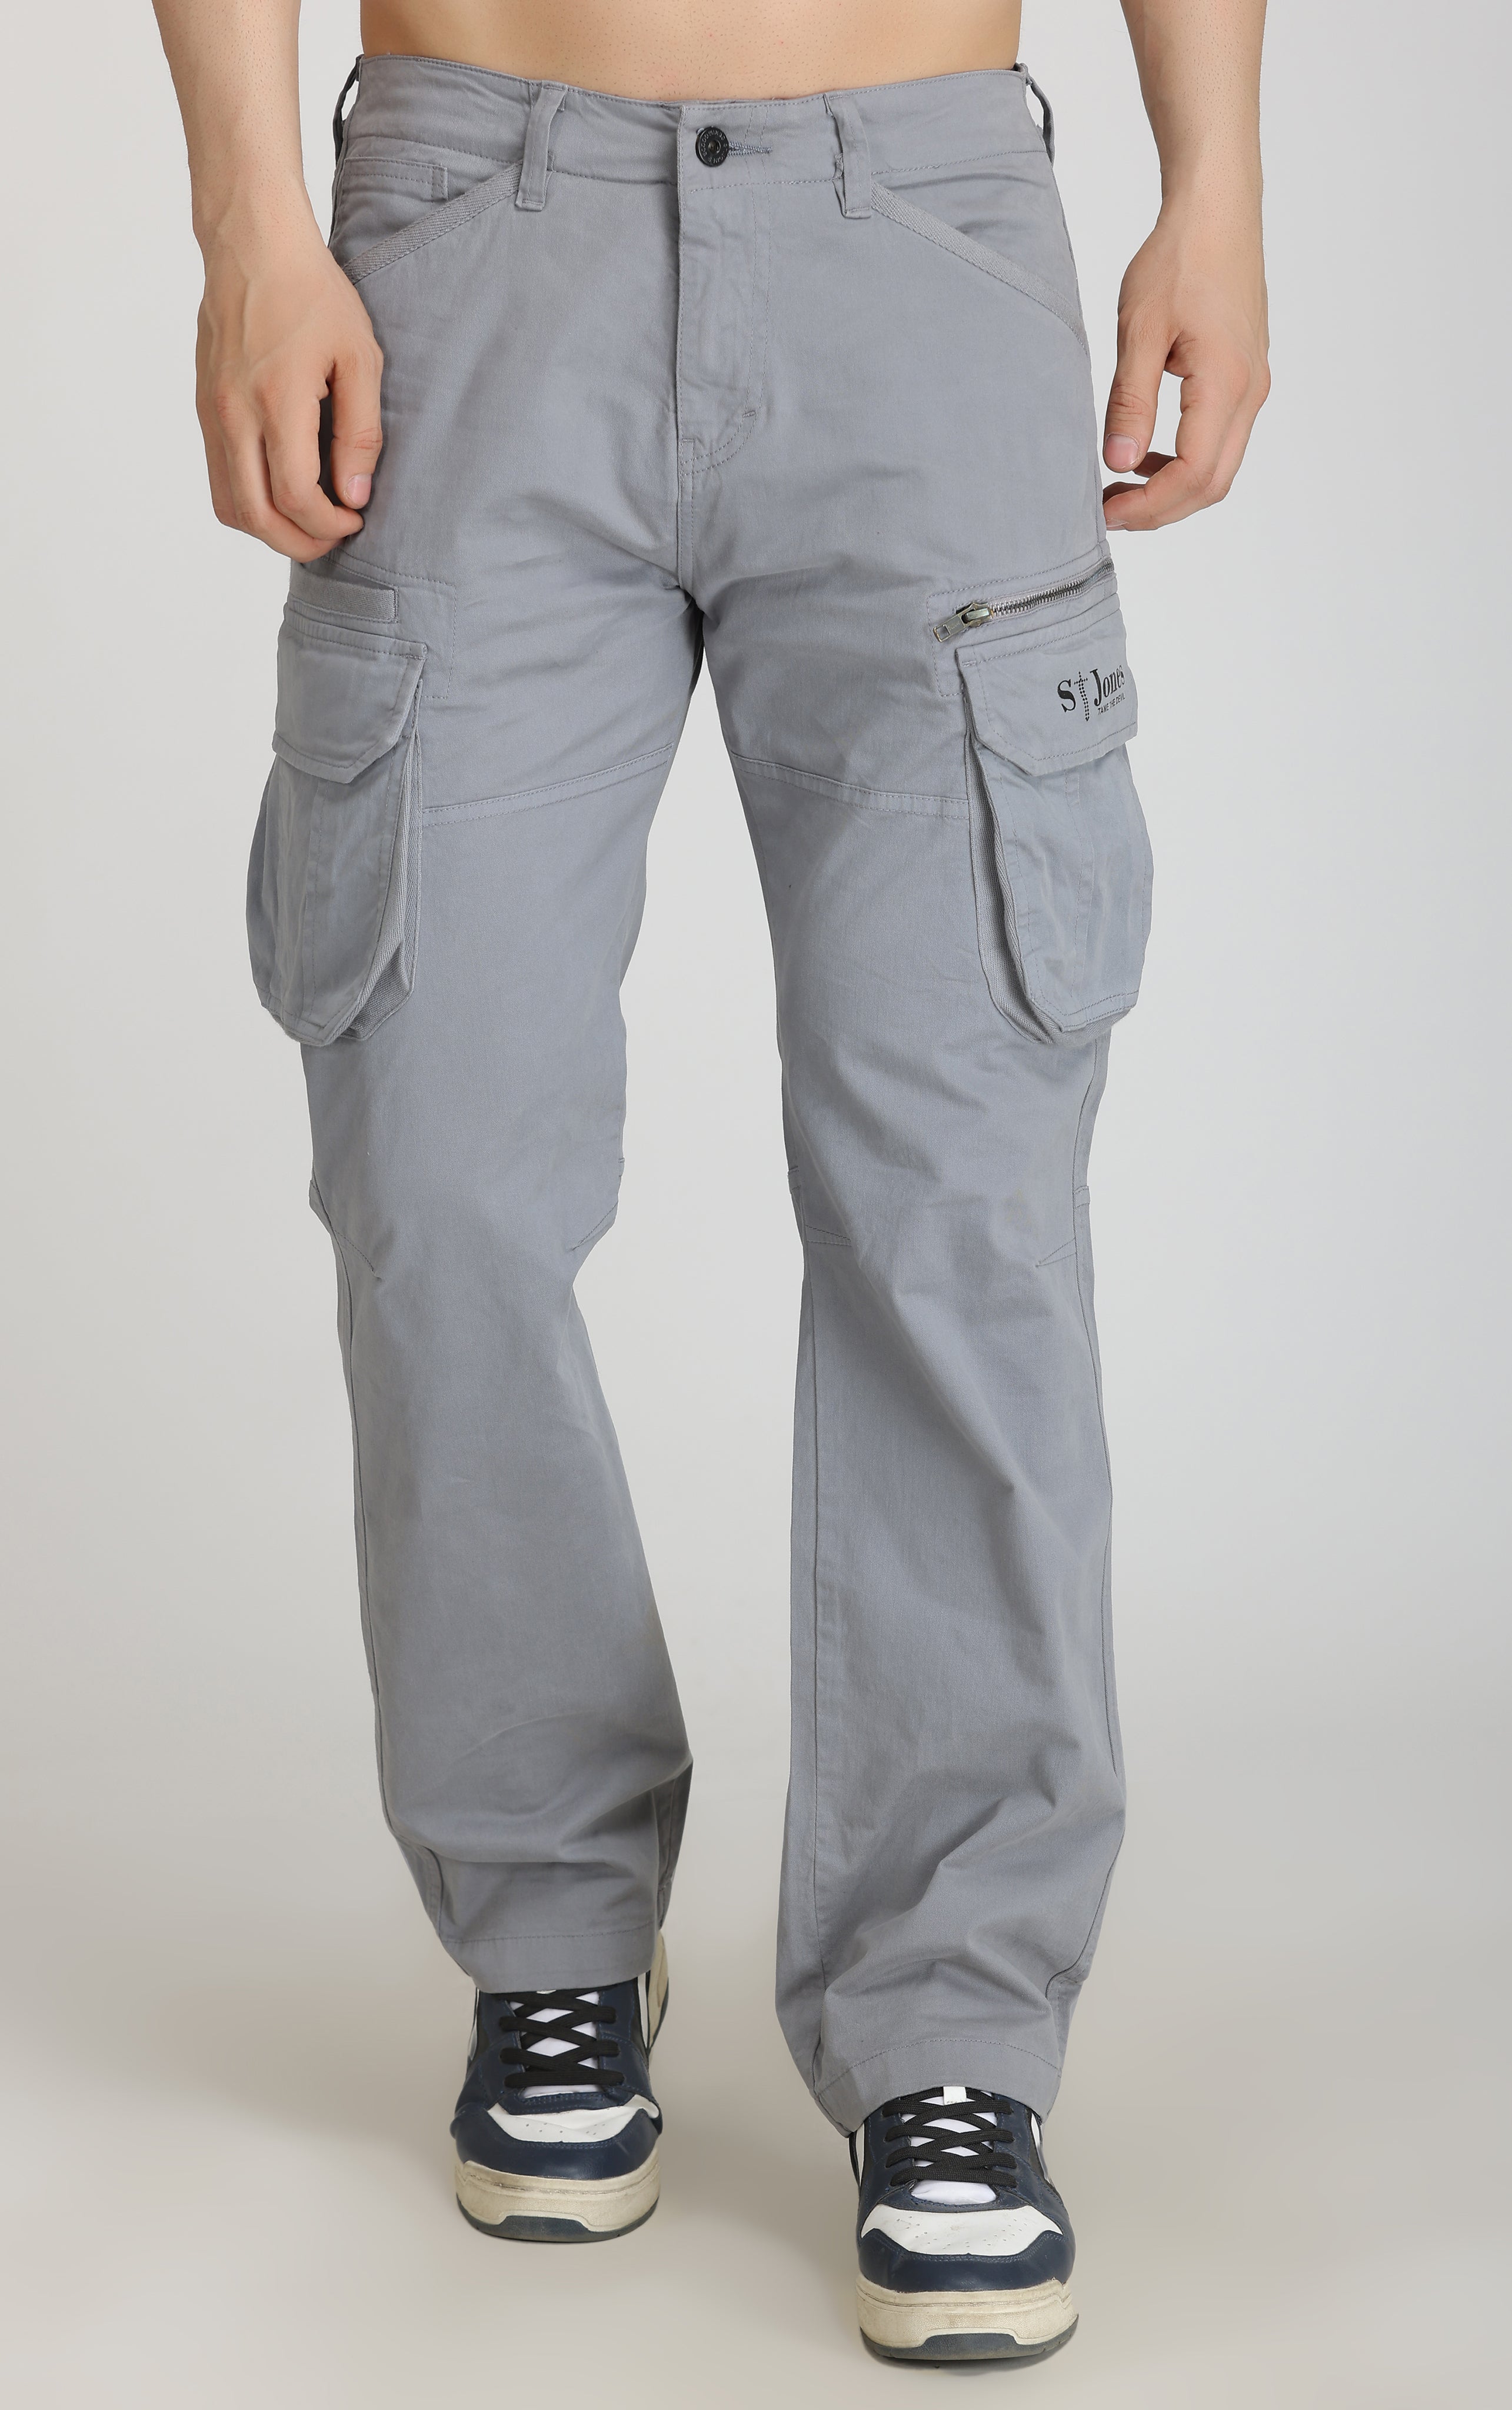 TRGPSG Men's Cargo Pants with 8 Pockets Cotton Cargo Work Pants(No  Belt),Khaki 44x34 - Walmart.com